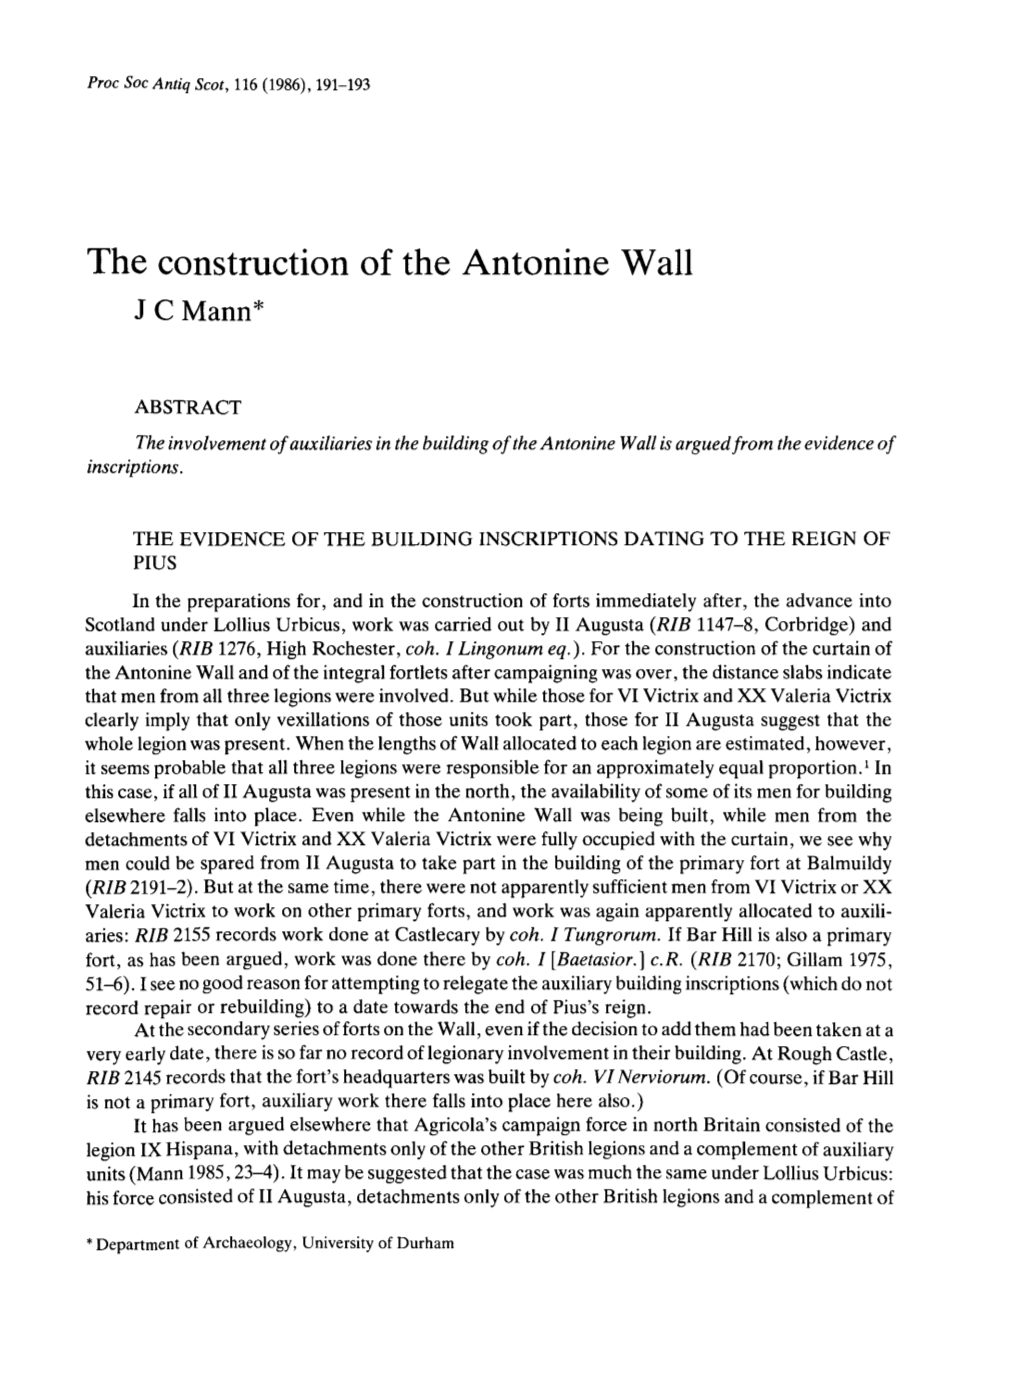 The Construction of the Antonine Wall J C Mann*